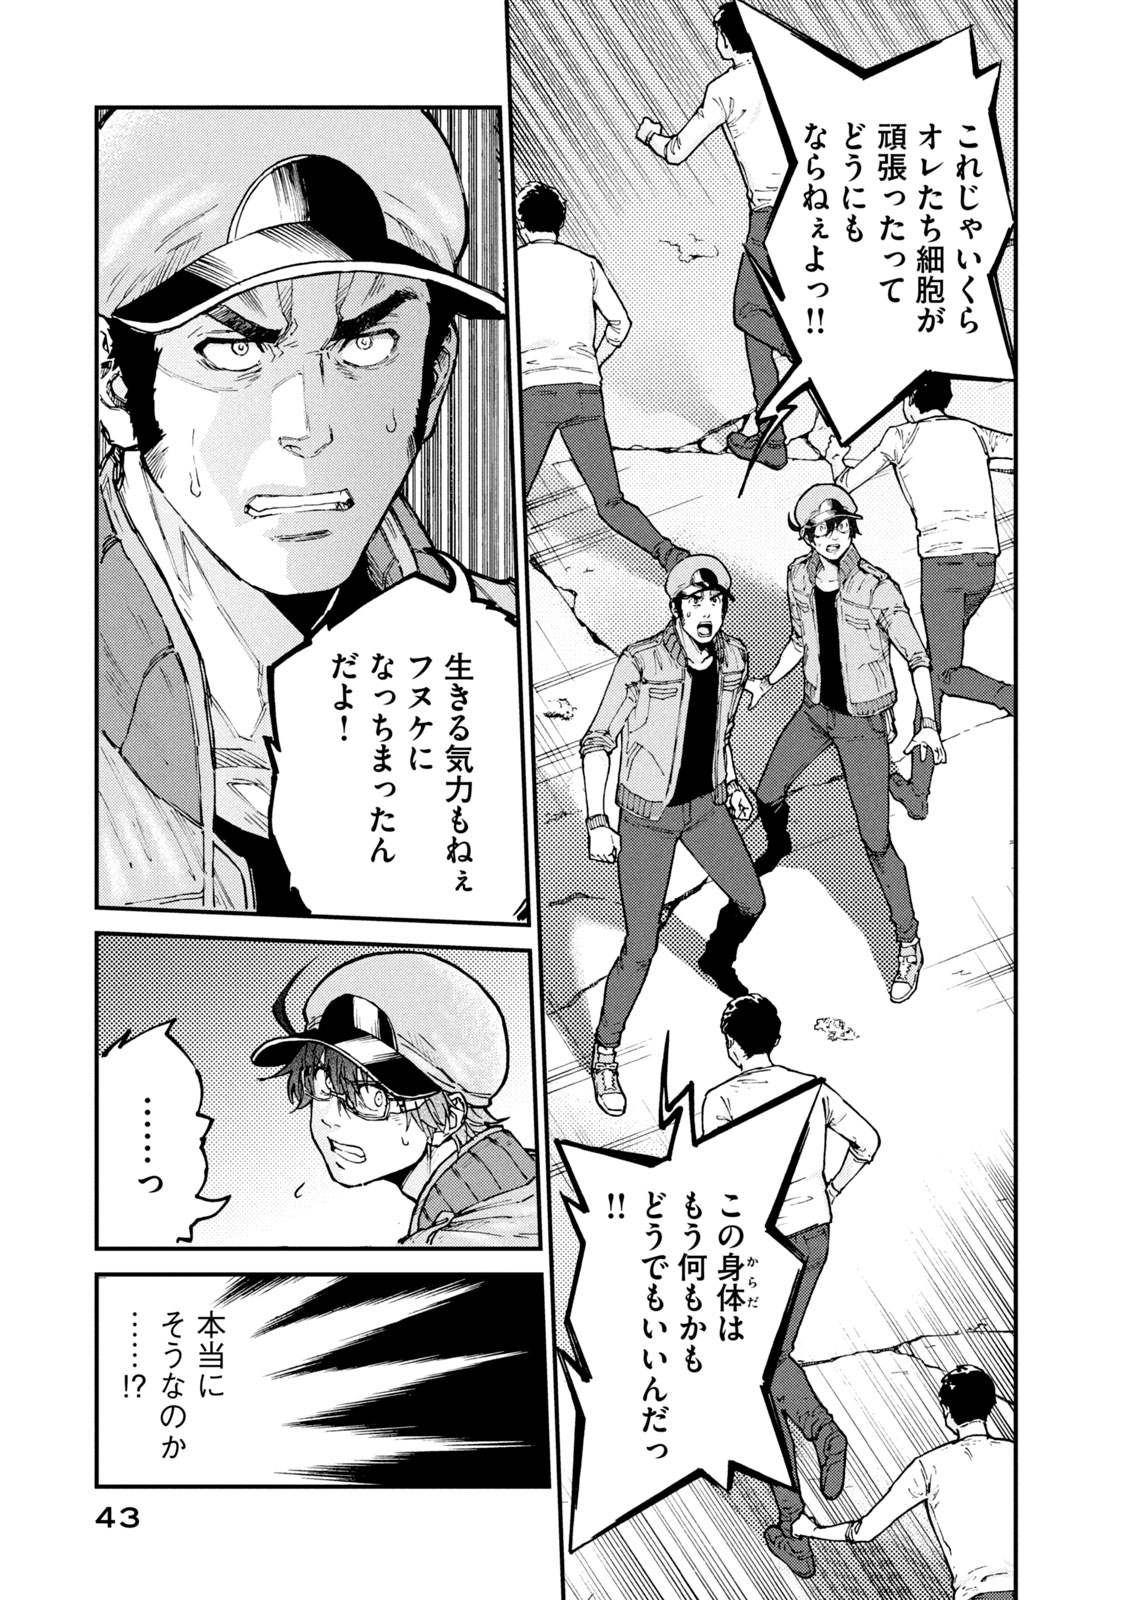 Hataraku Saibou BLACK - Chapter 33 - Page 11